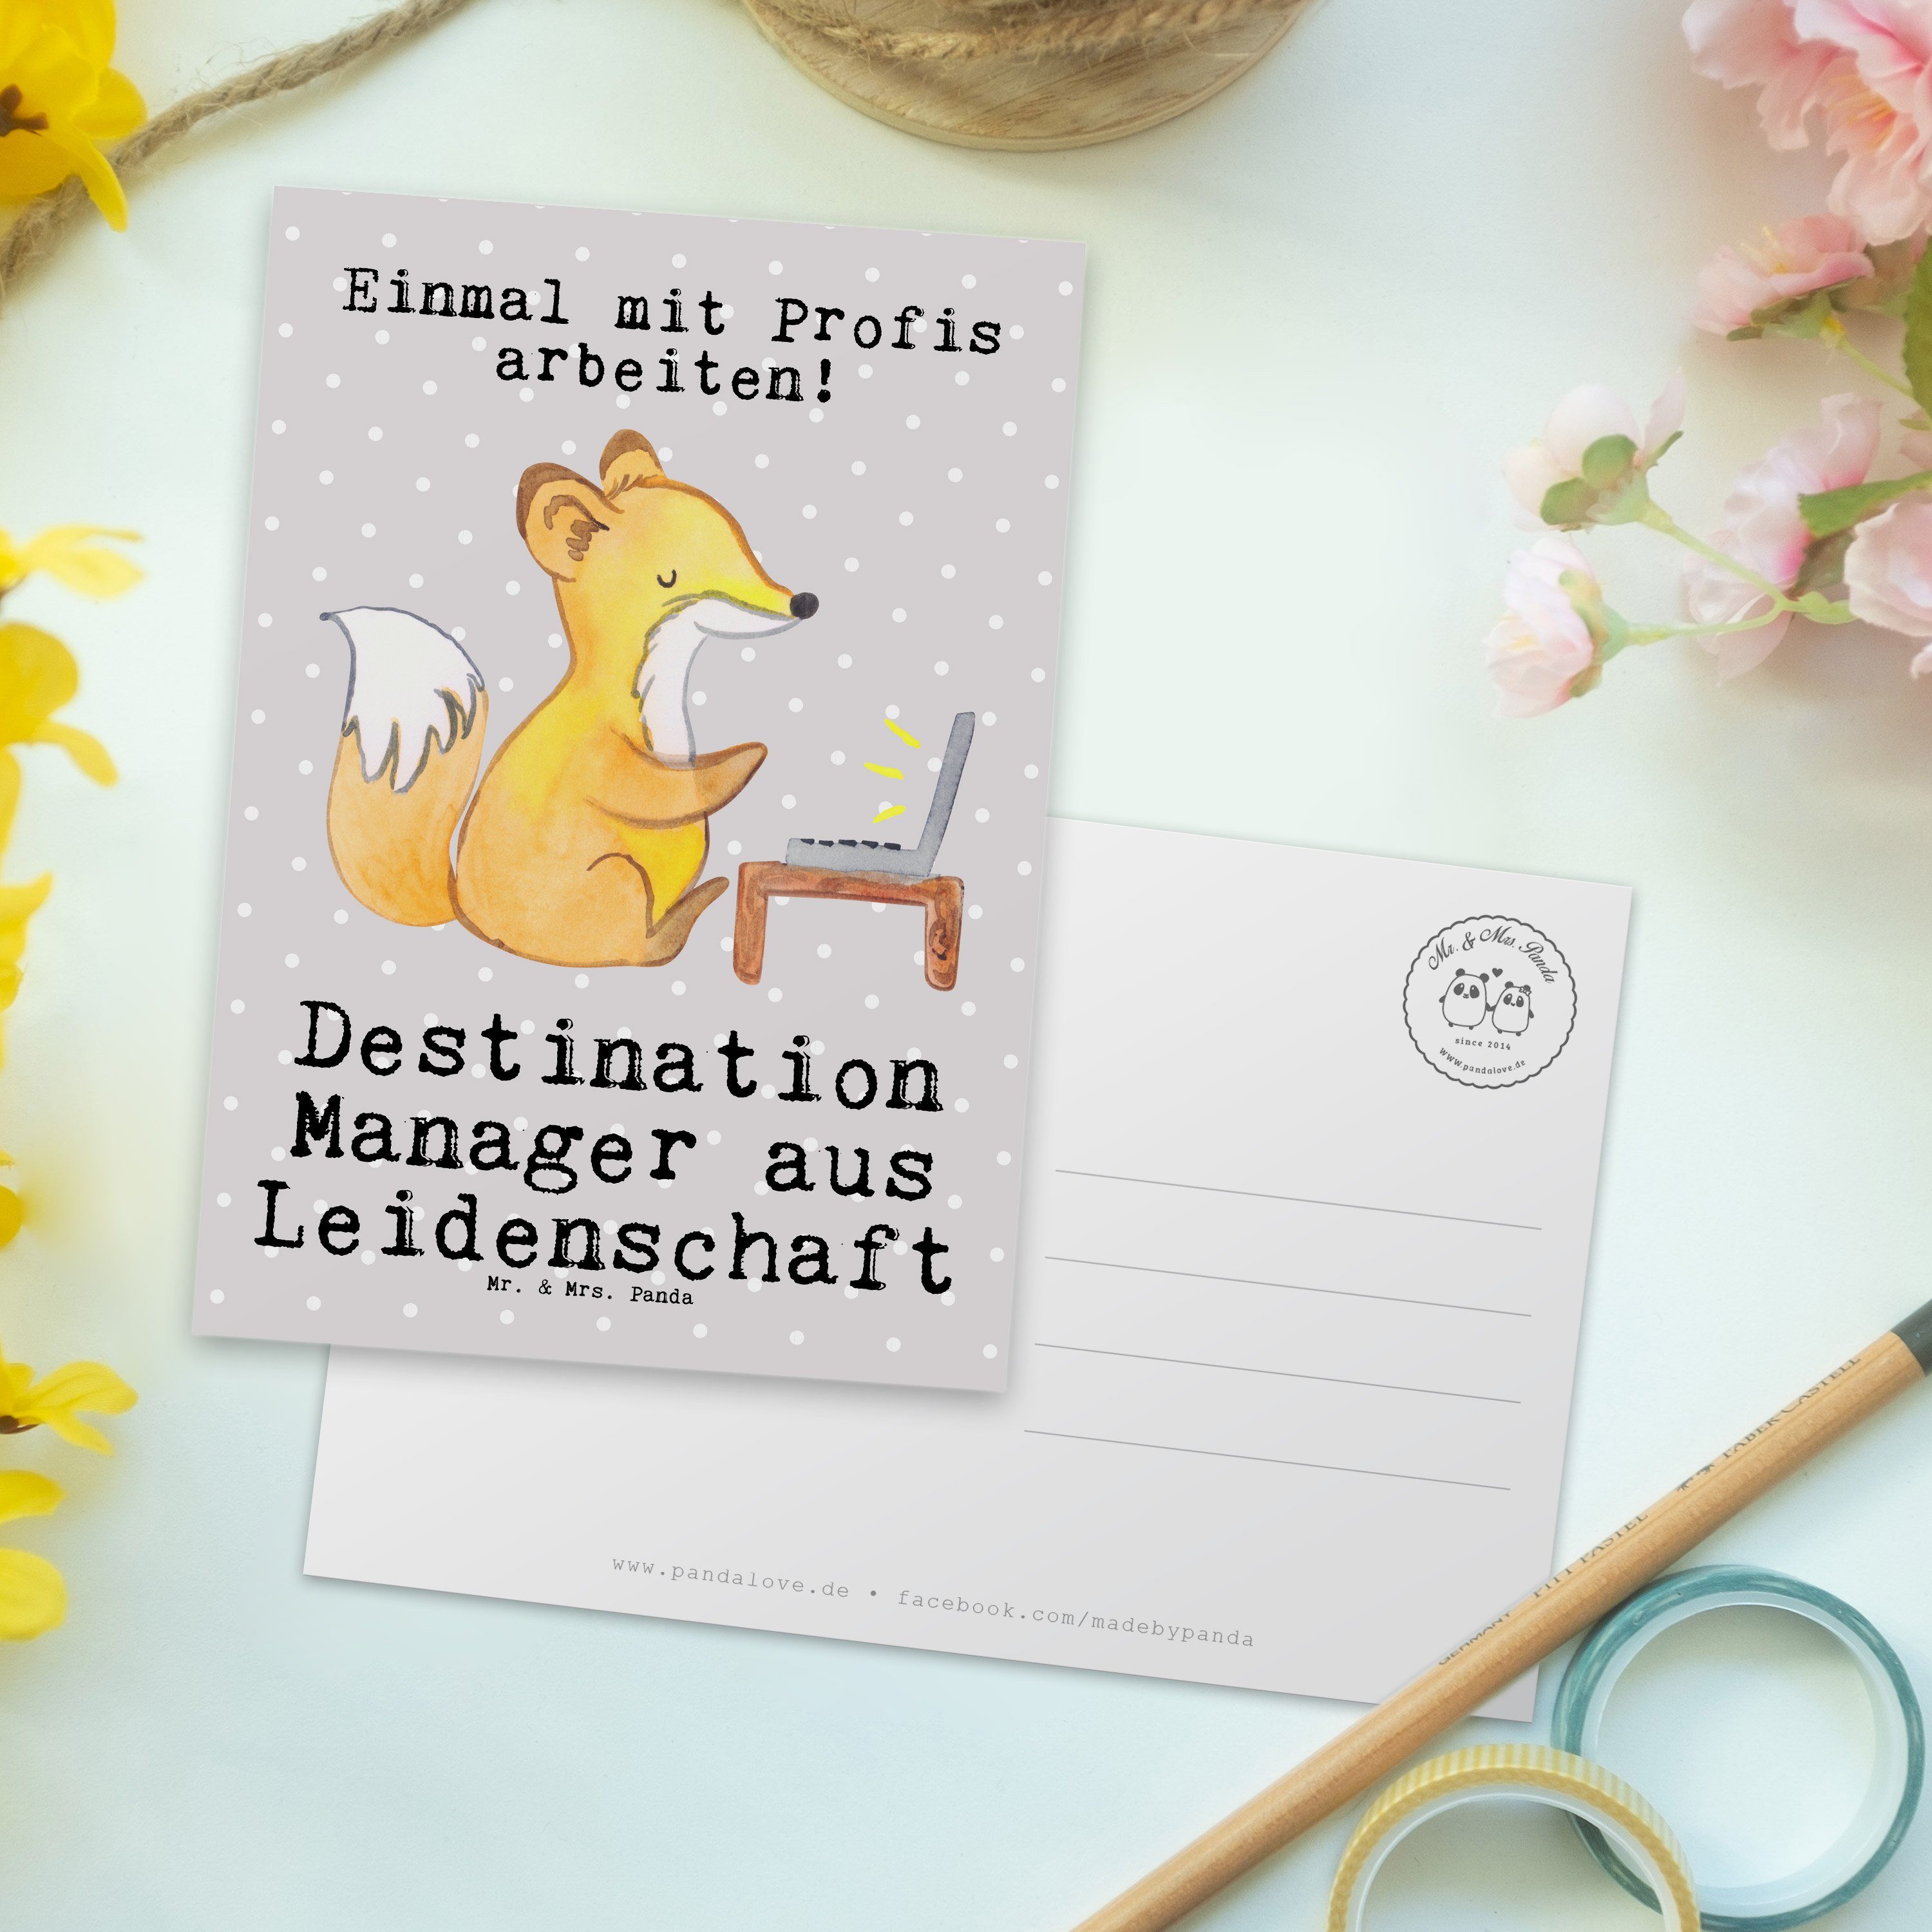 Mr. & Mrs. - Geschenk, Panda Leidenschaft Grußk - Postkarte Grau Pastell Manager aus Destination